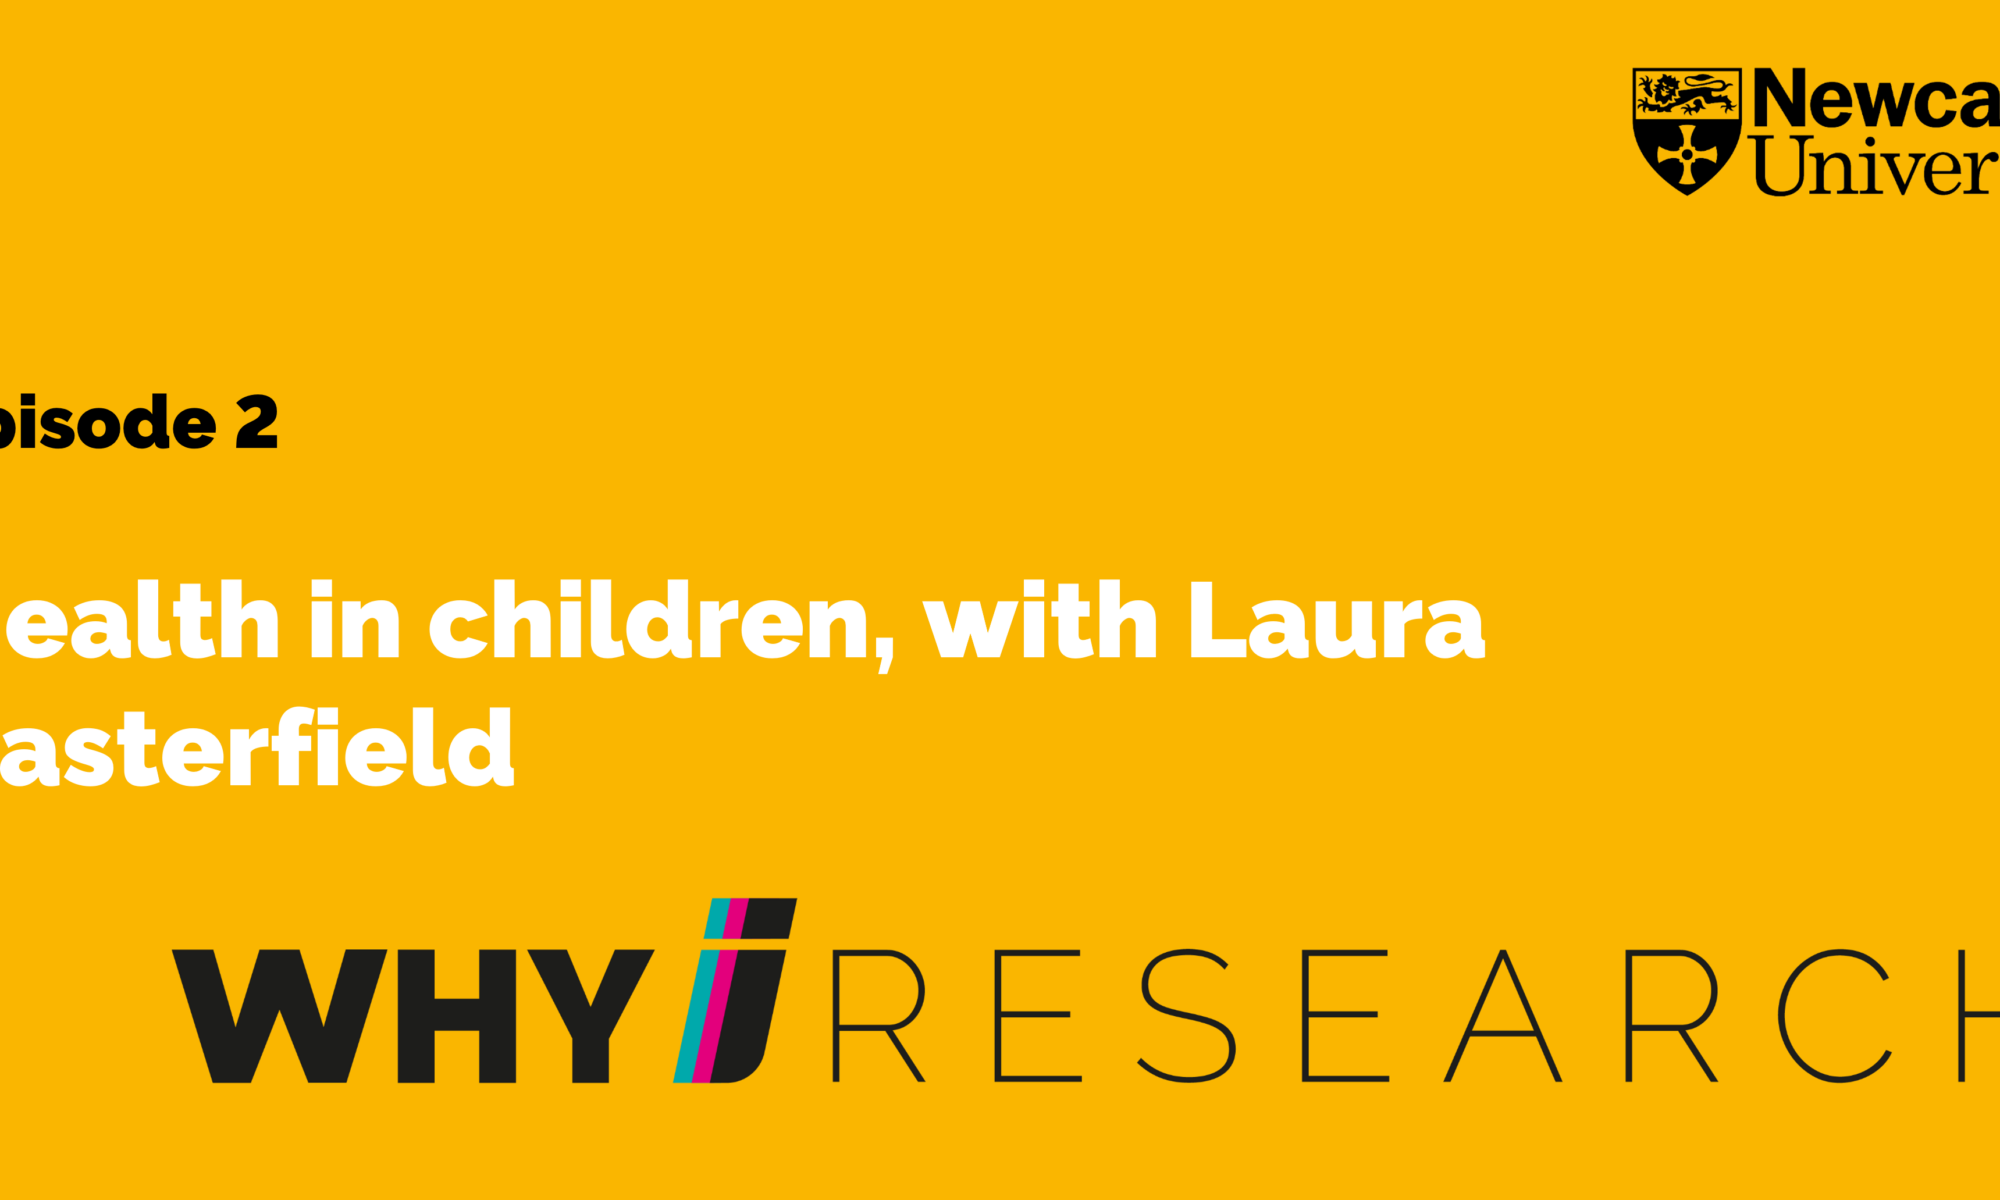 Health in children with laura basterfield